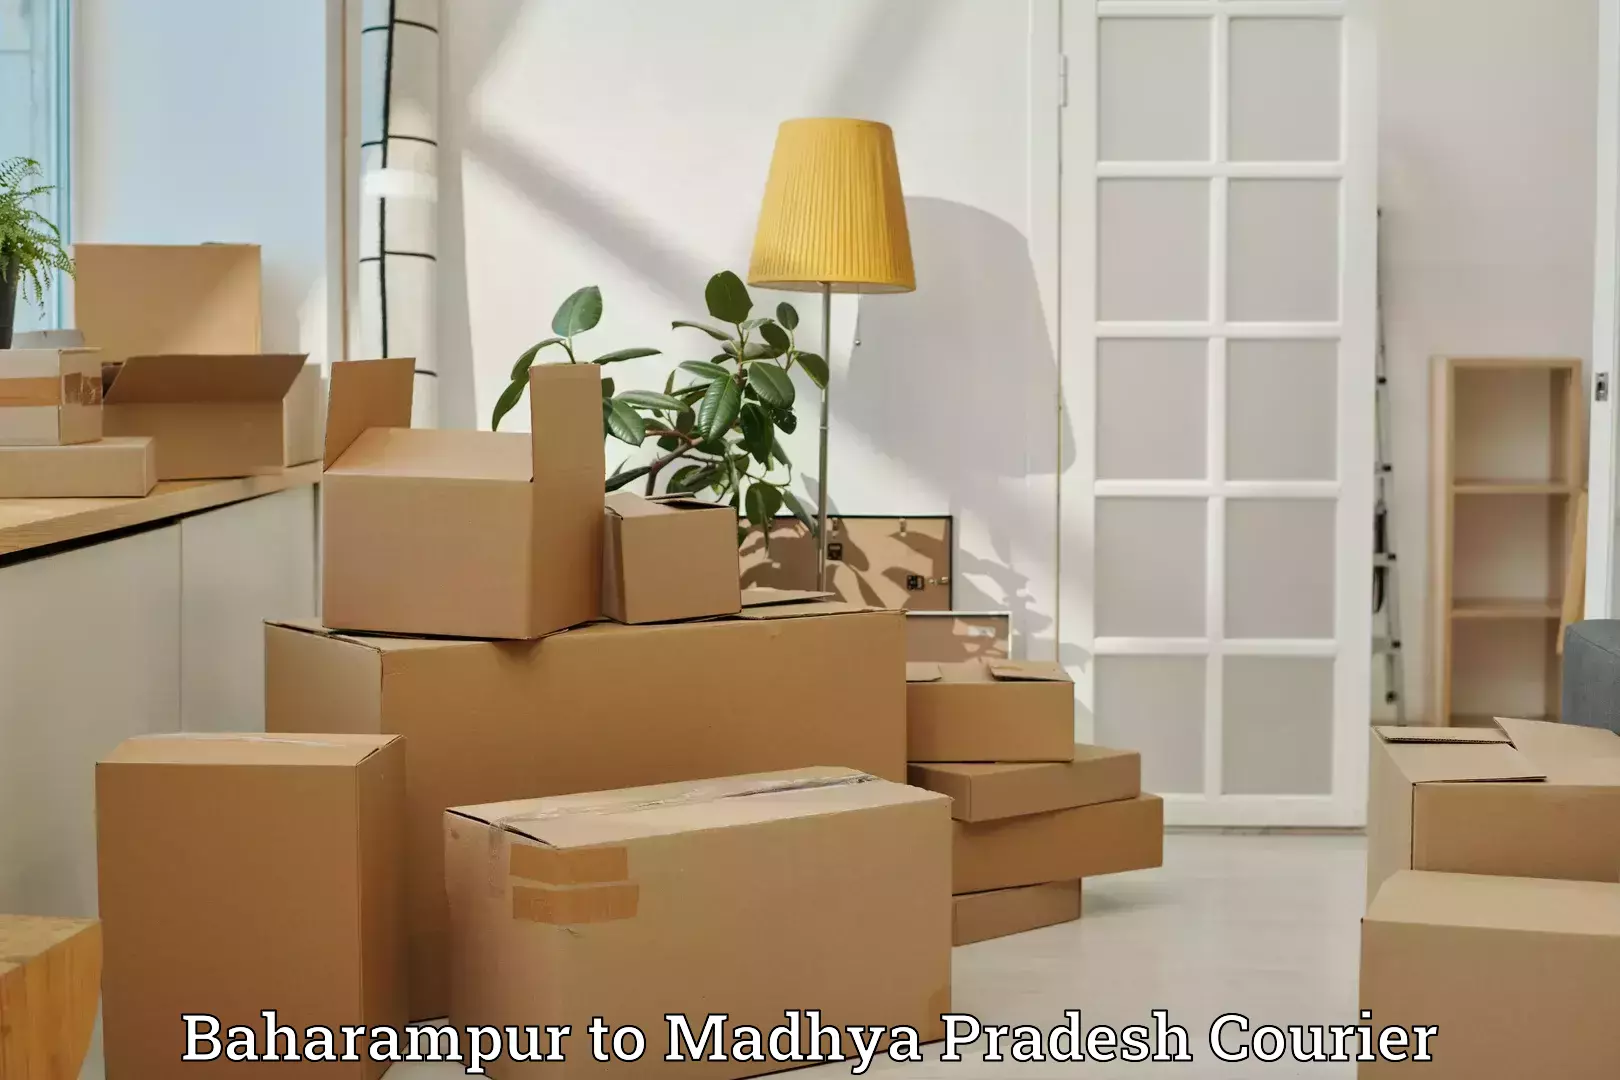 Luggage shipment specialists Baharampur to Maheshwar